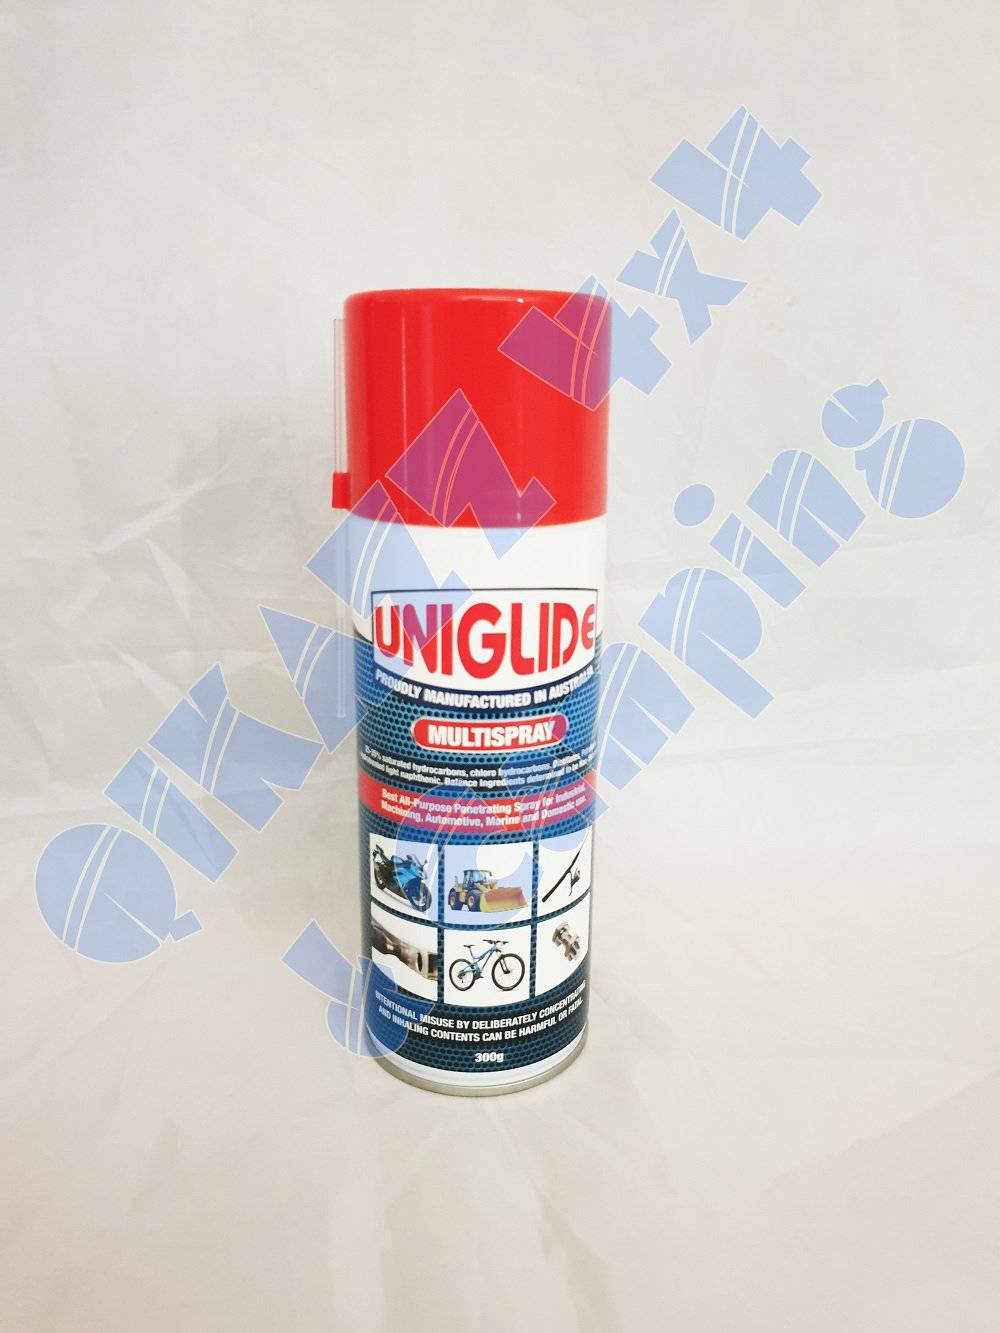 Uniglide Multispray - 300g All Purpose Penetrating Spray / Lubricant - 1 Carton (12 x 300g) | Performance Lubricants Australia